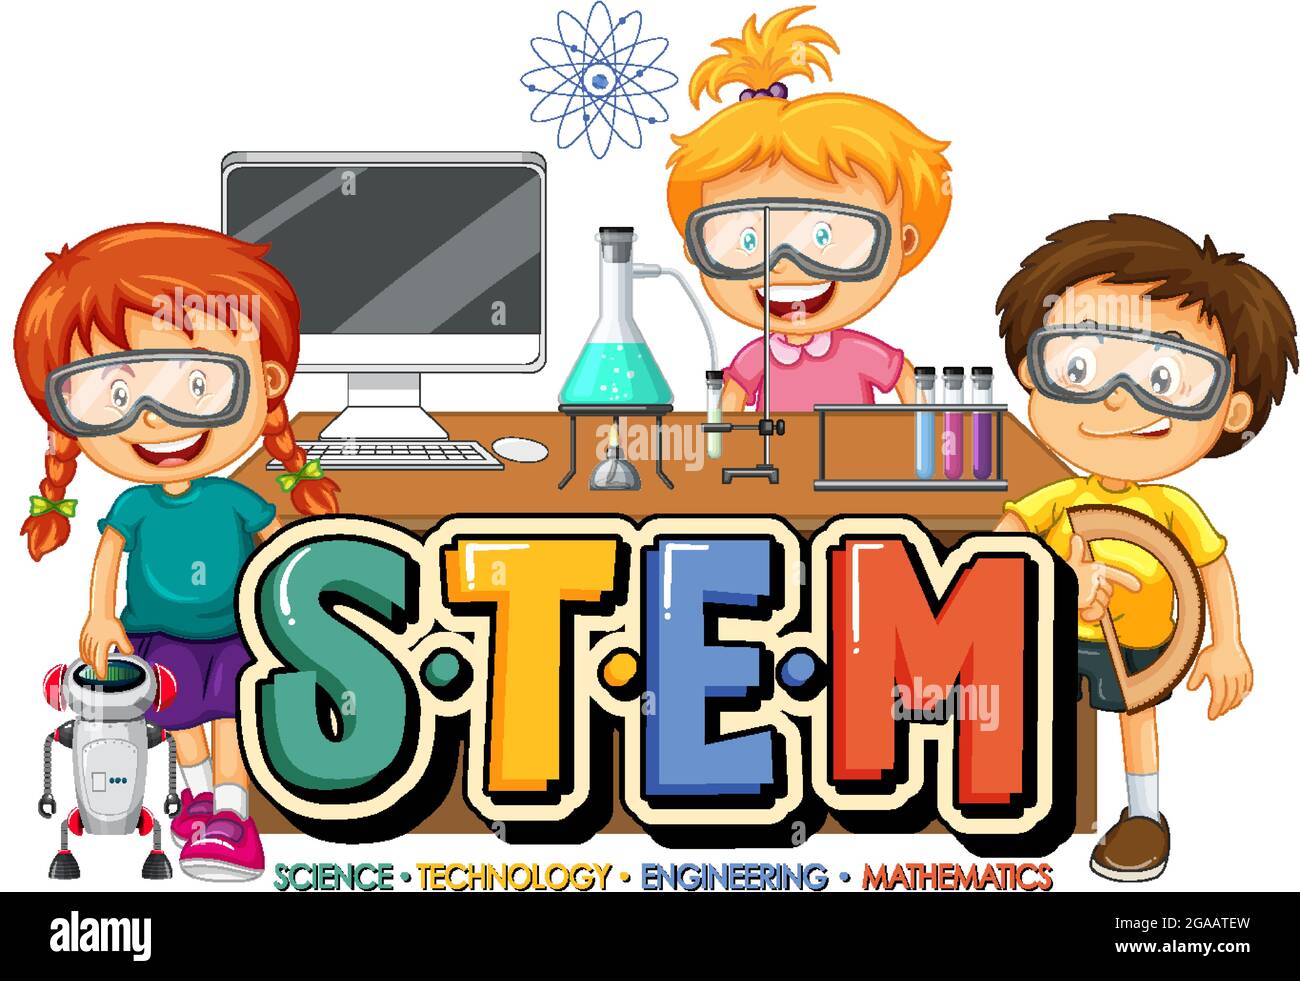 STEM education logo with many kids cartoon character illustration Stock  Vector Image & Art - Alamy